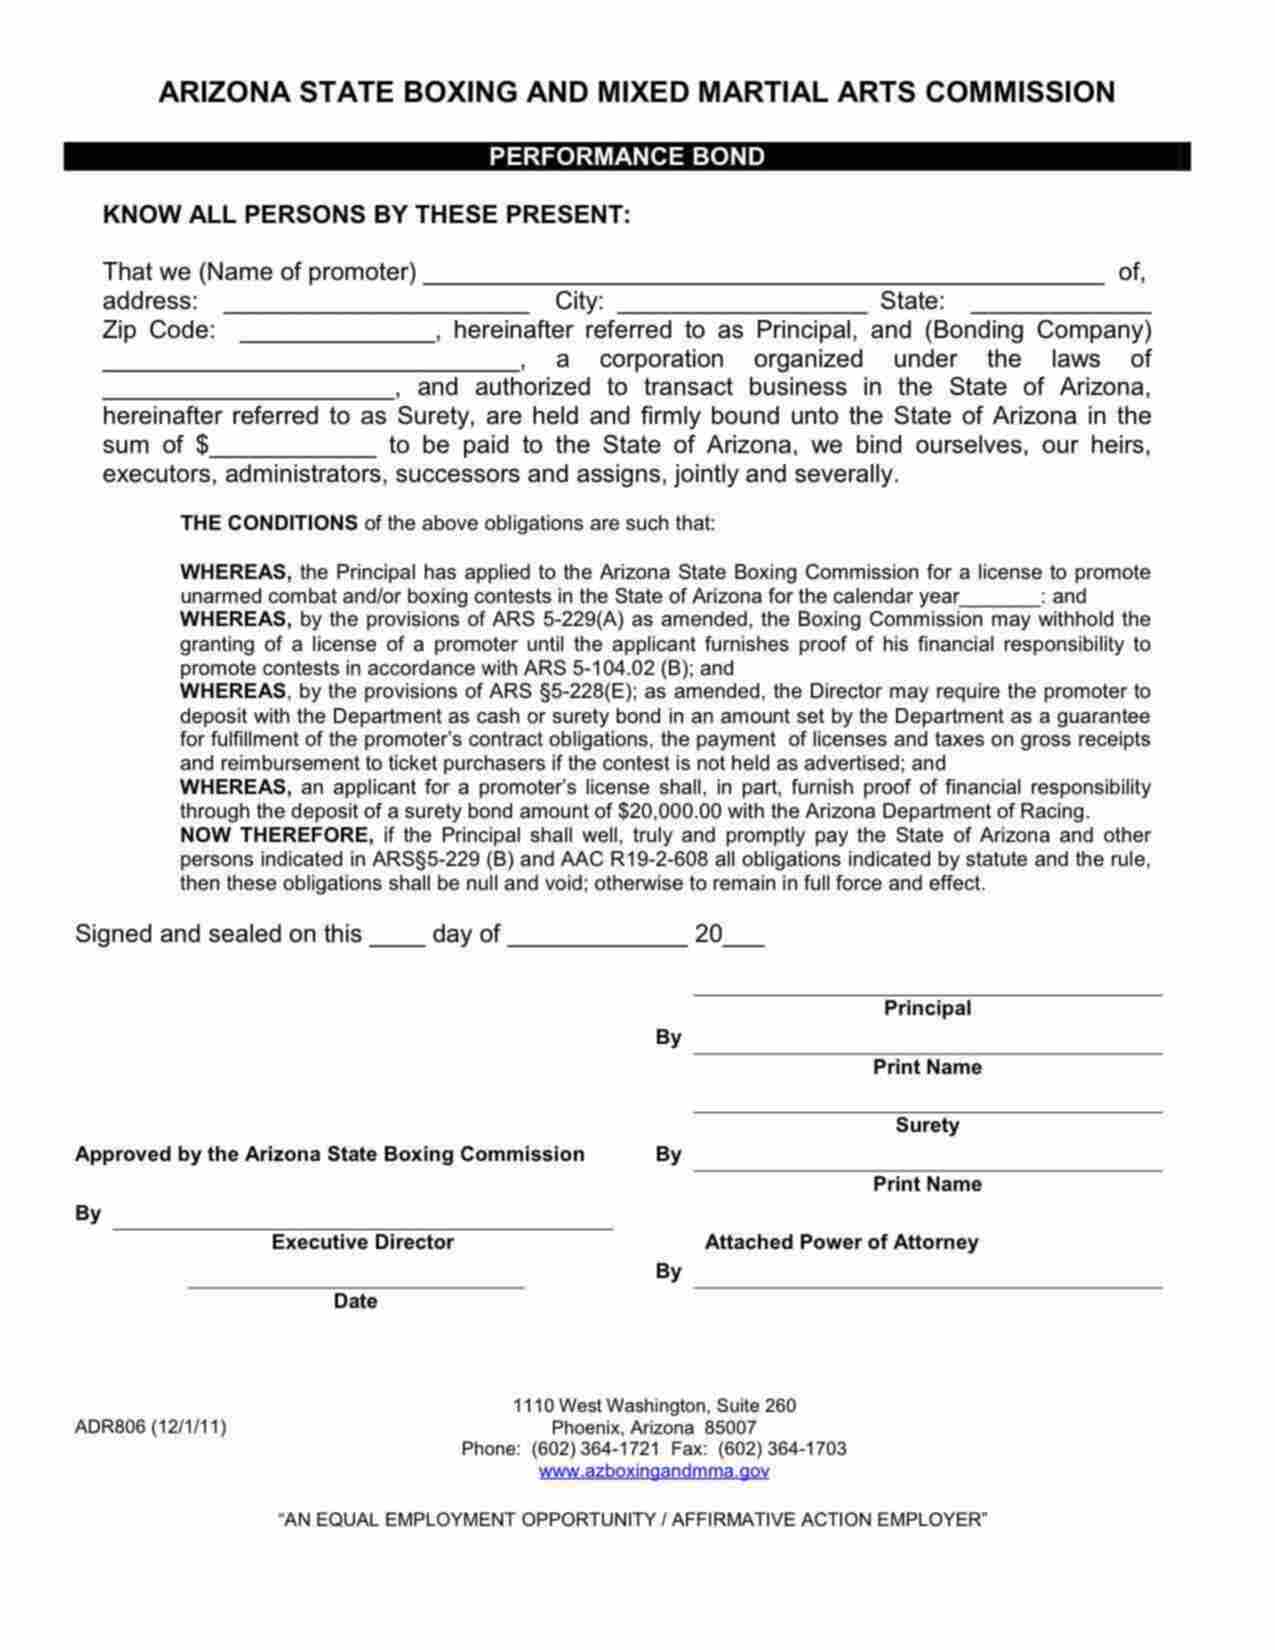 Arizona Boxing Promoter's License Bond Form